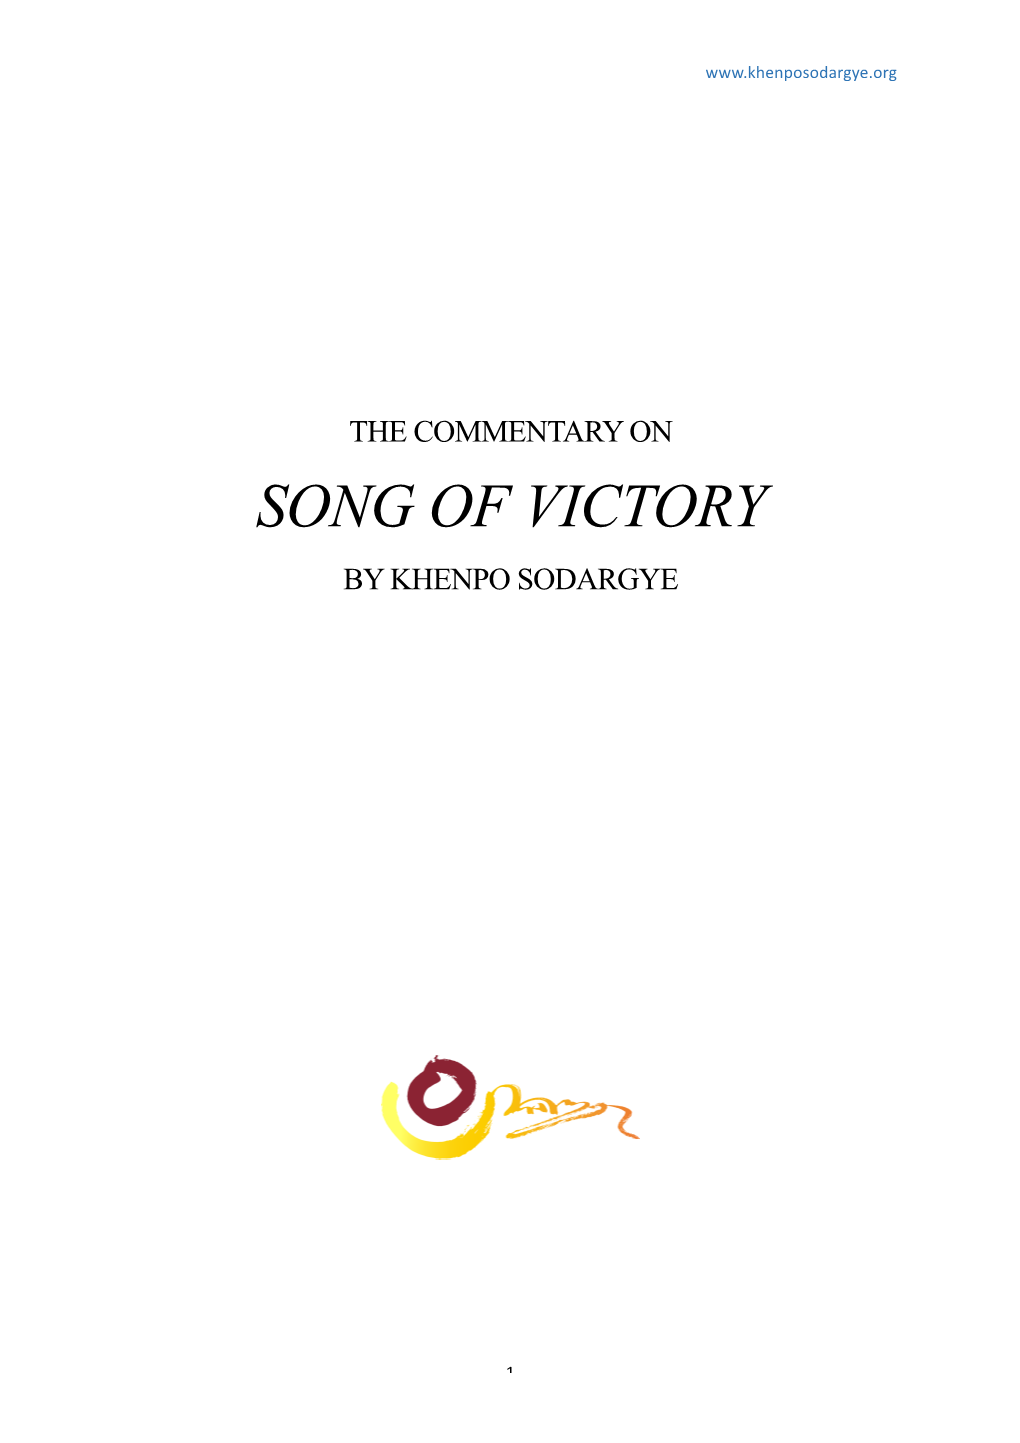 Song of Victory by Khenpo Sodargye